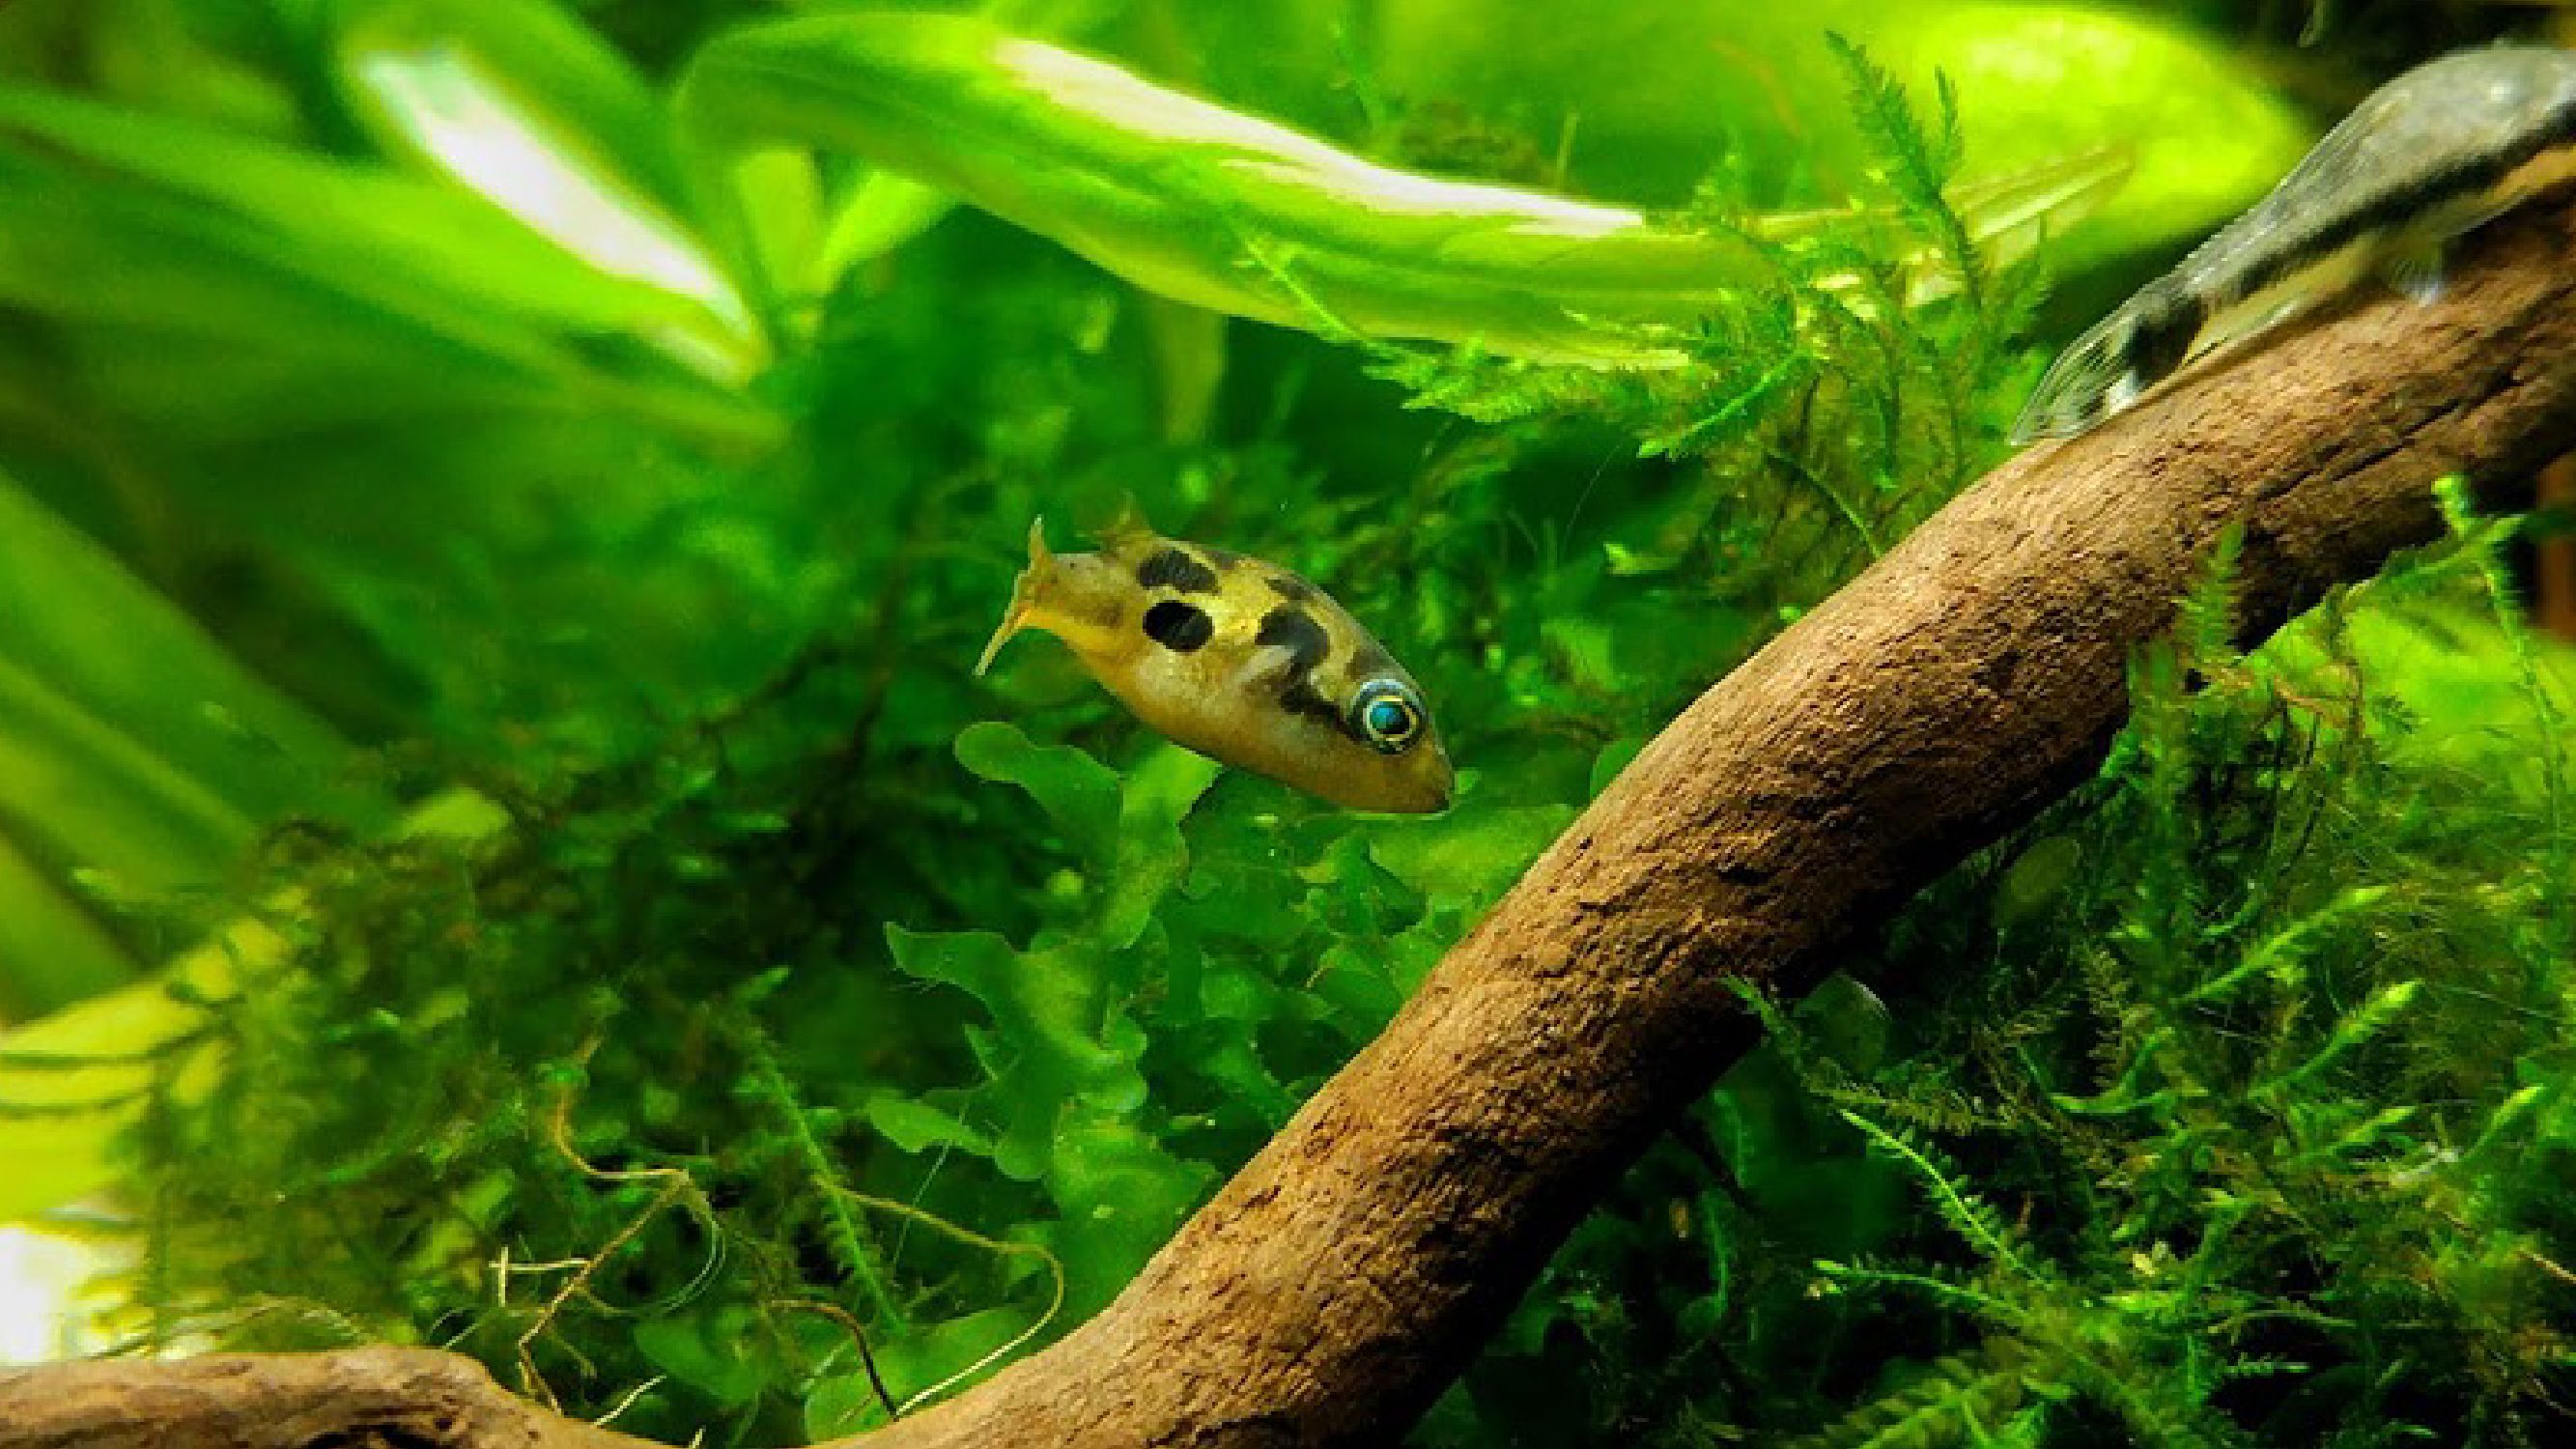 pico tank fish freshwater